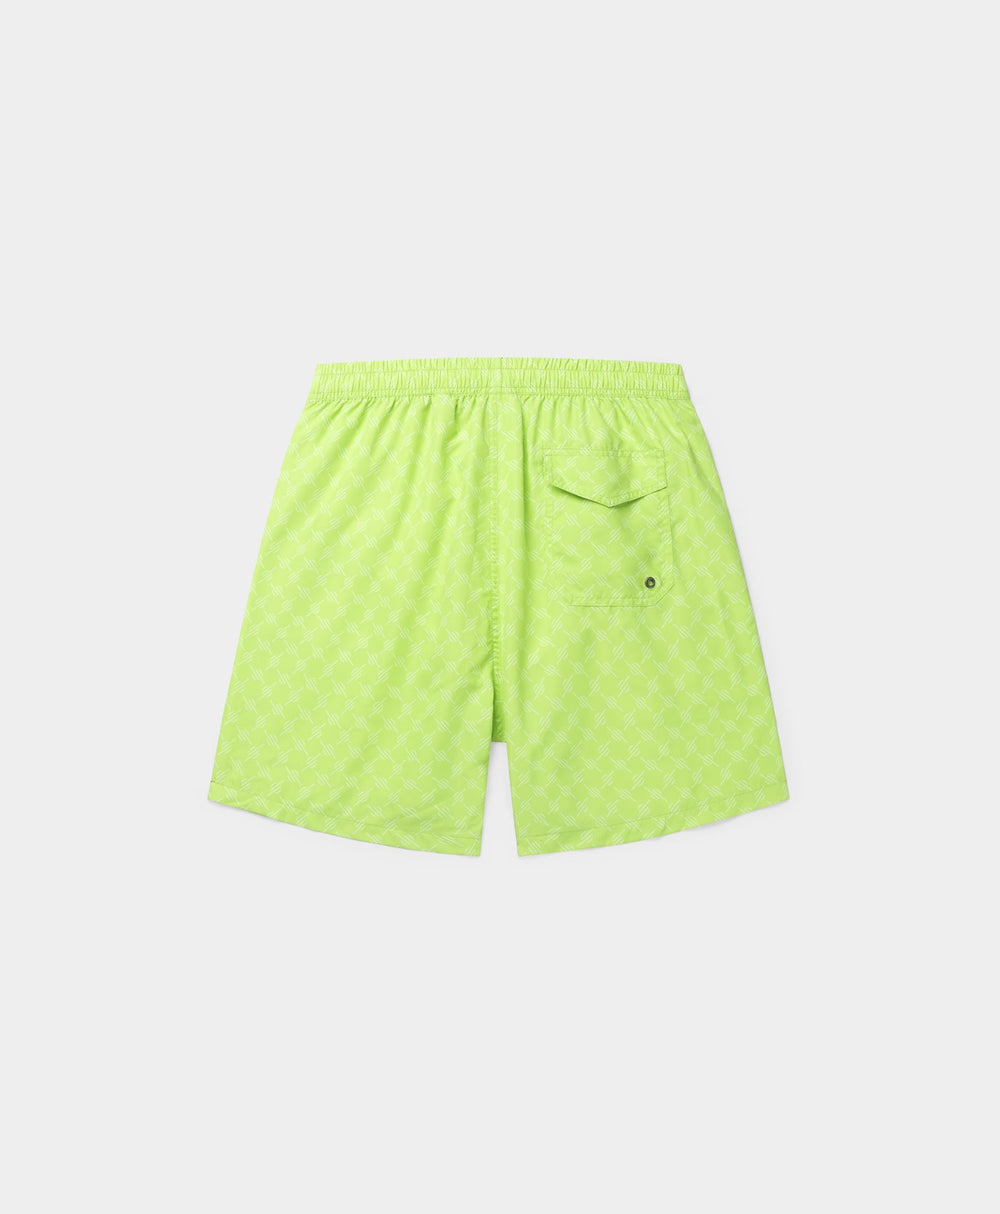 DP - Daiquiri Green Kato Monogram Swimshorts - Packshot - Front